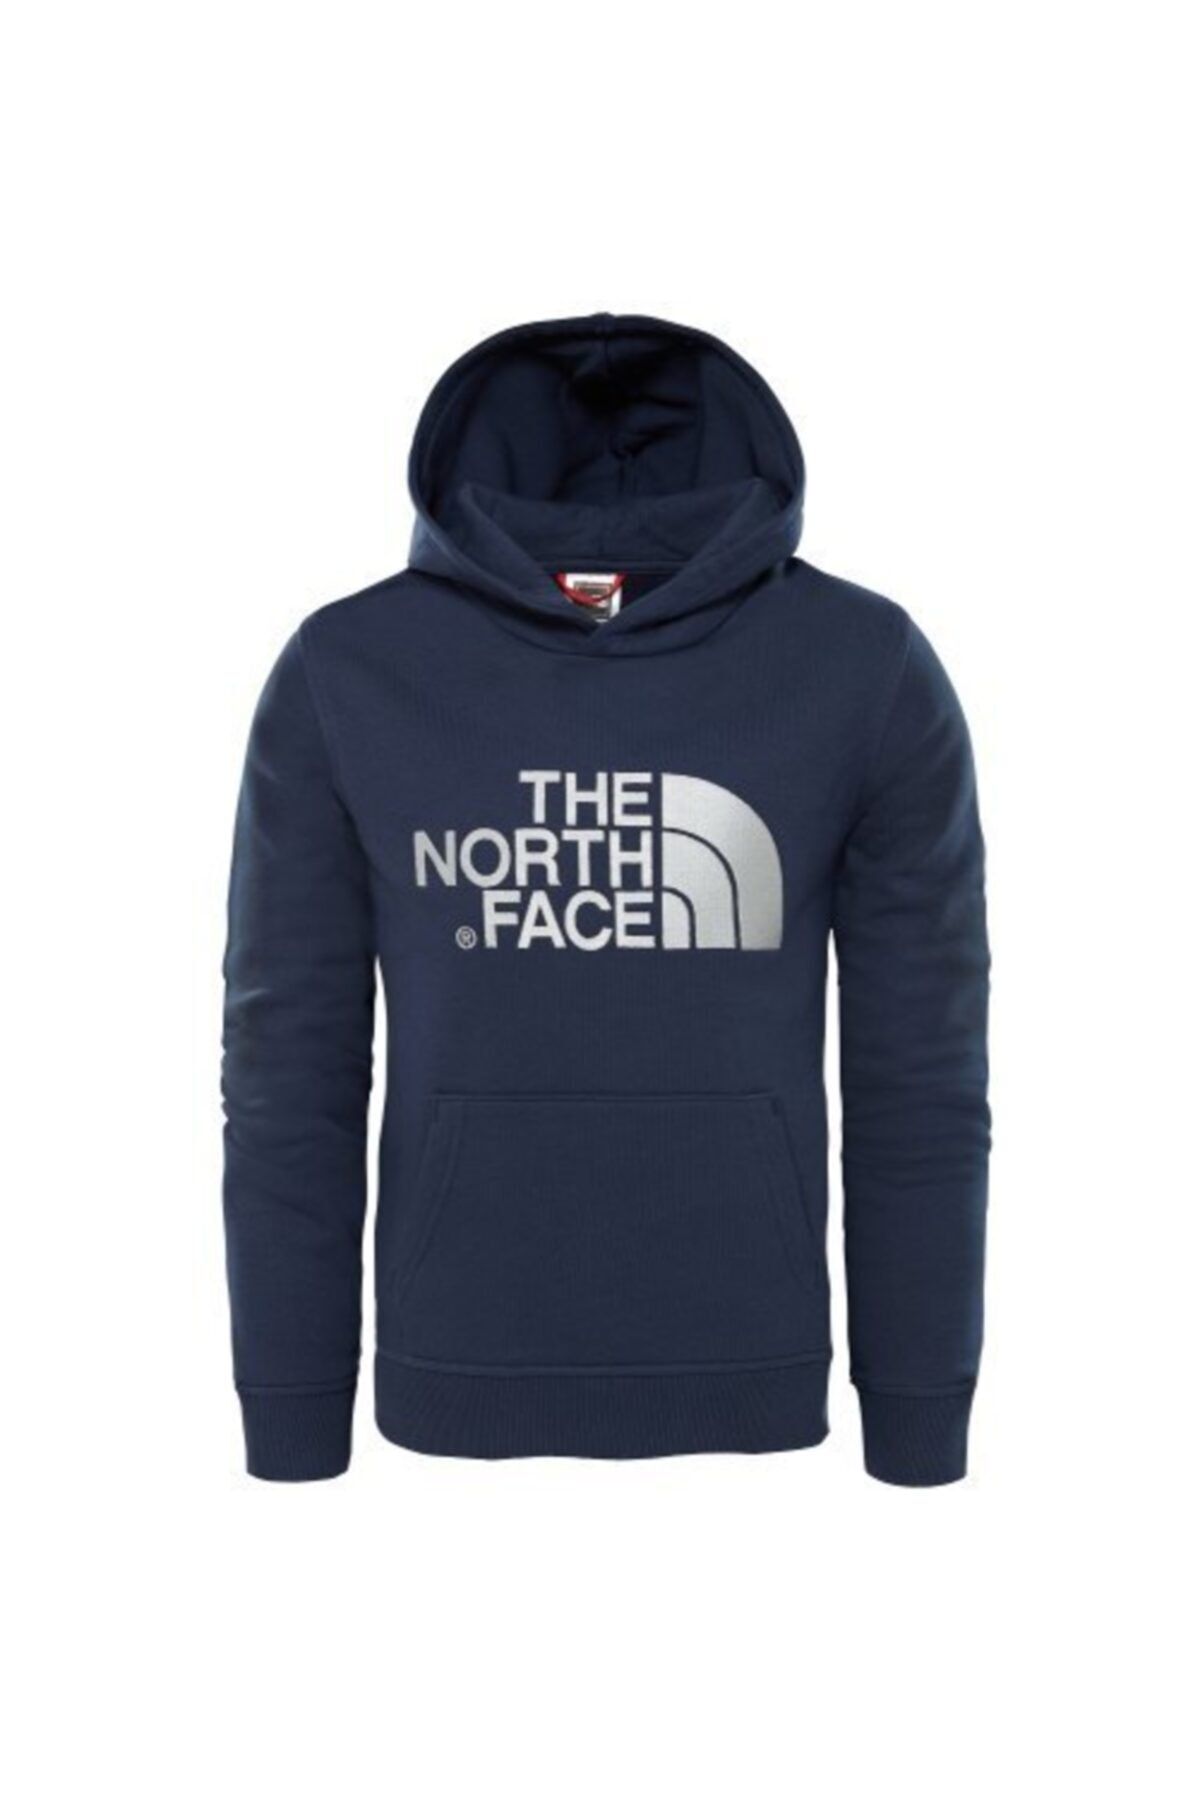 The North Face Unisex Çocuk Füme Crew Hologramlı Logo Kapüşonlu Sweatshirt